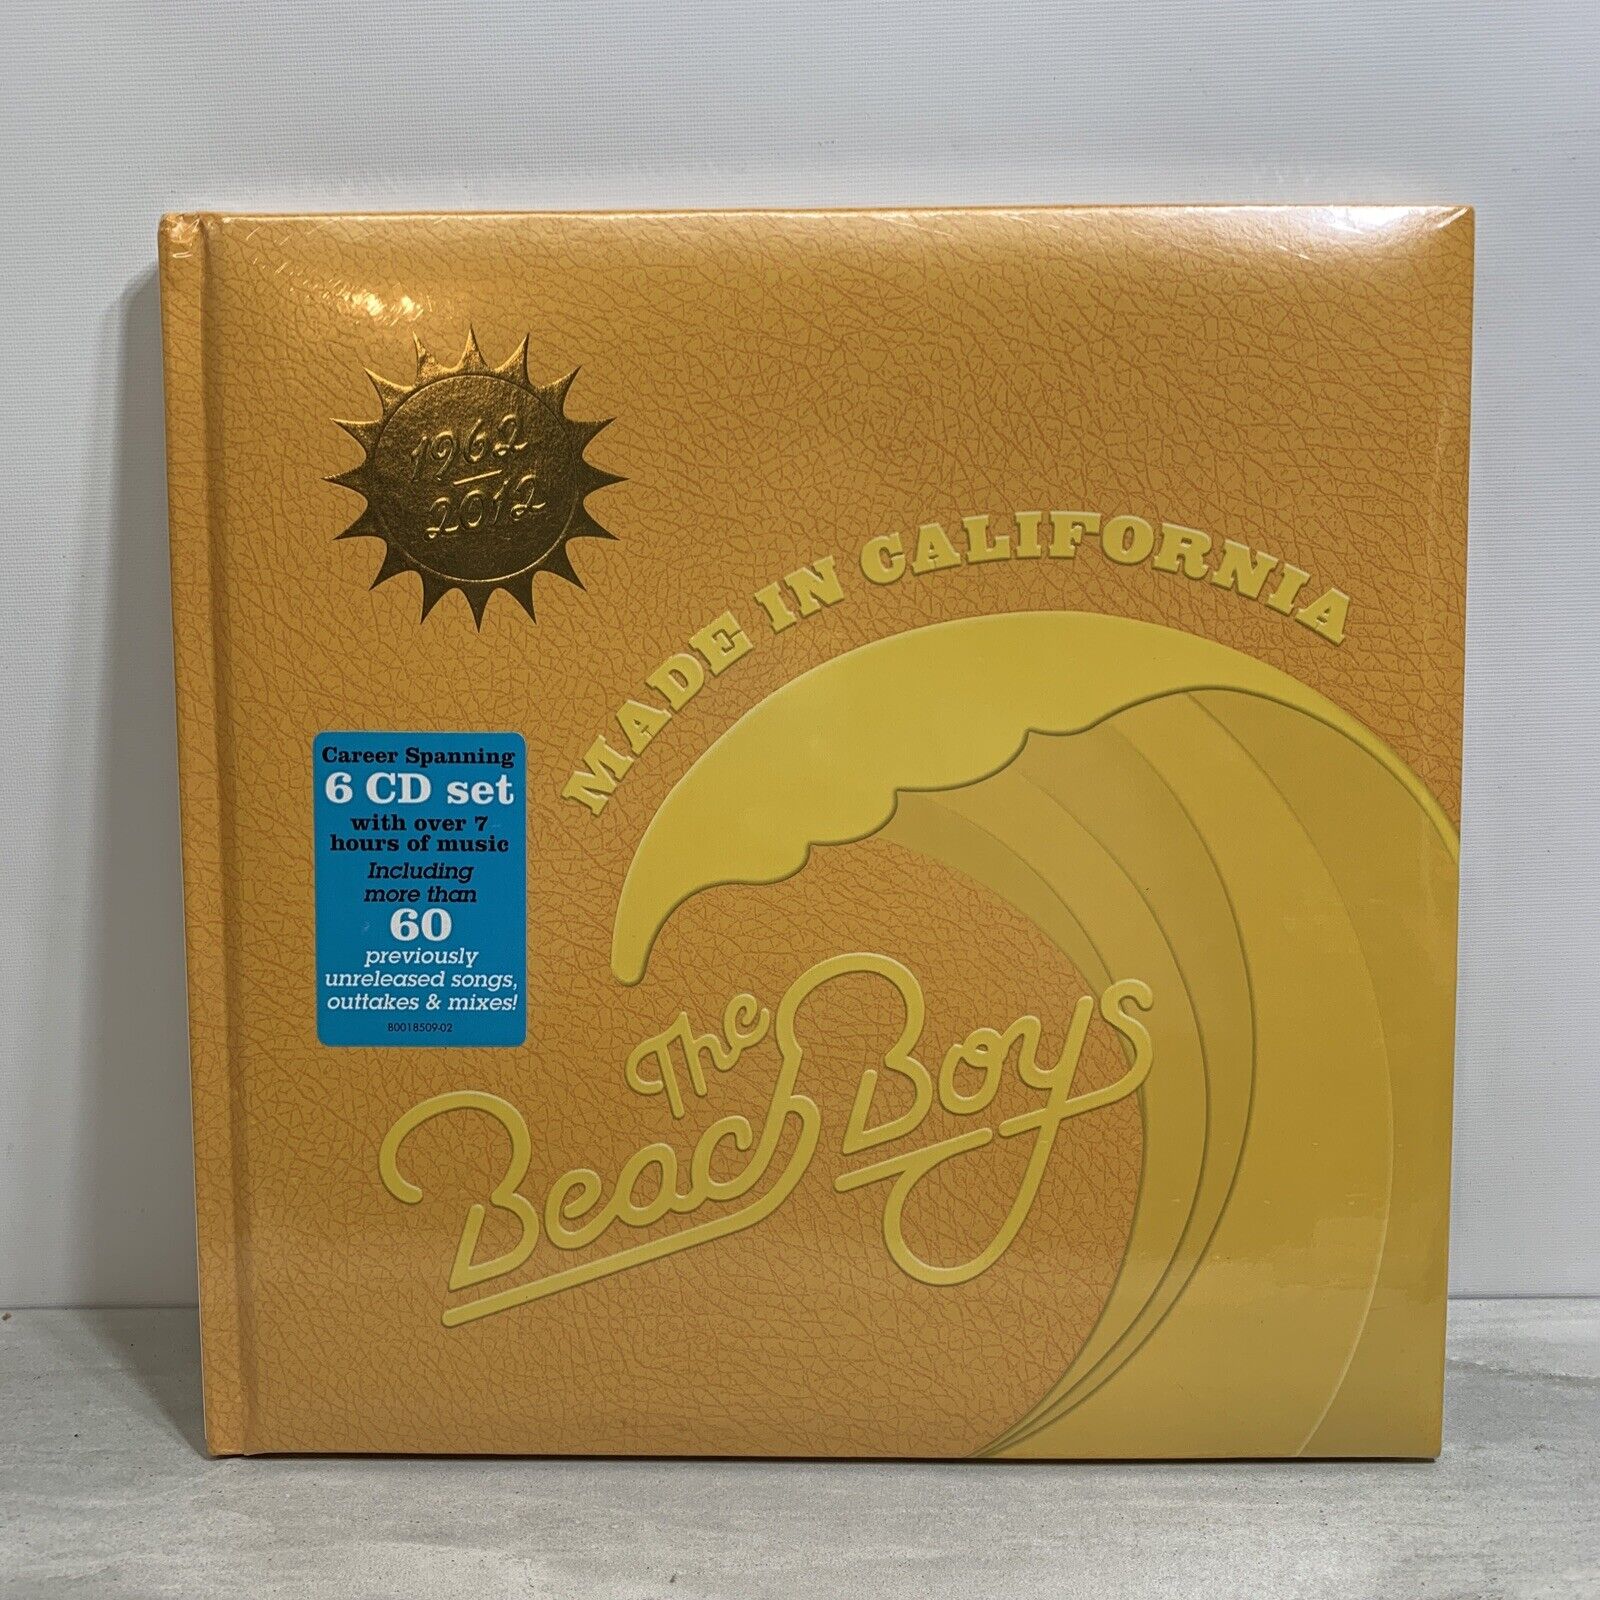 BRAND NEW The Beach Boys - Made in California 1962-2012 6-CD Box Set Sealed NIB